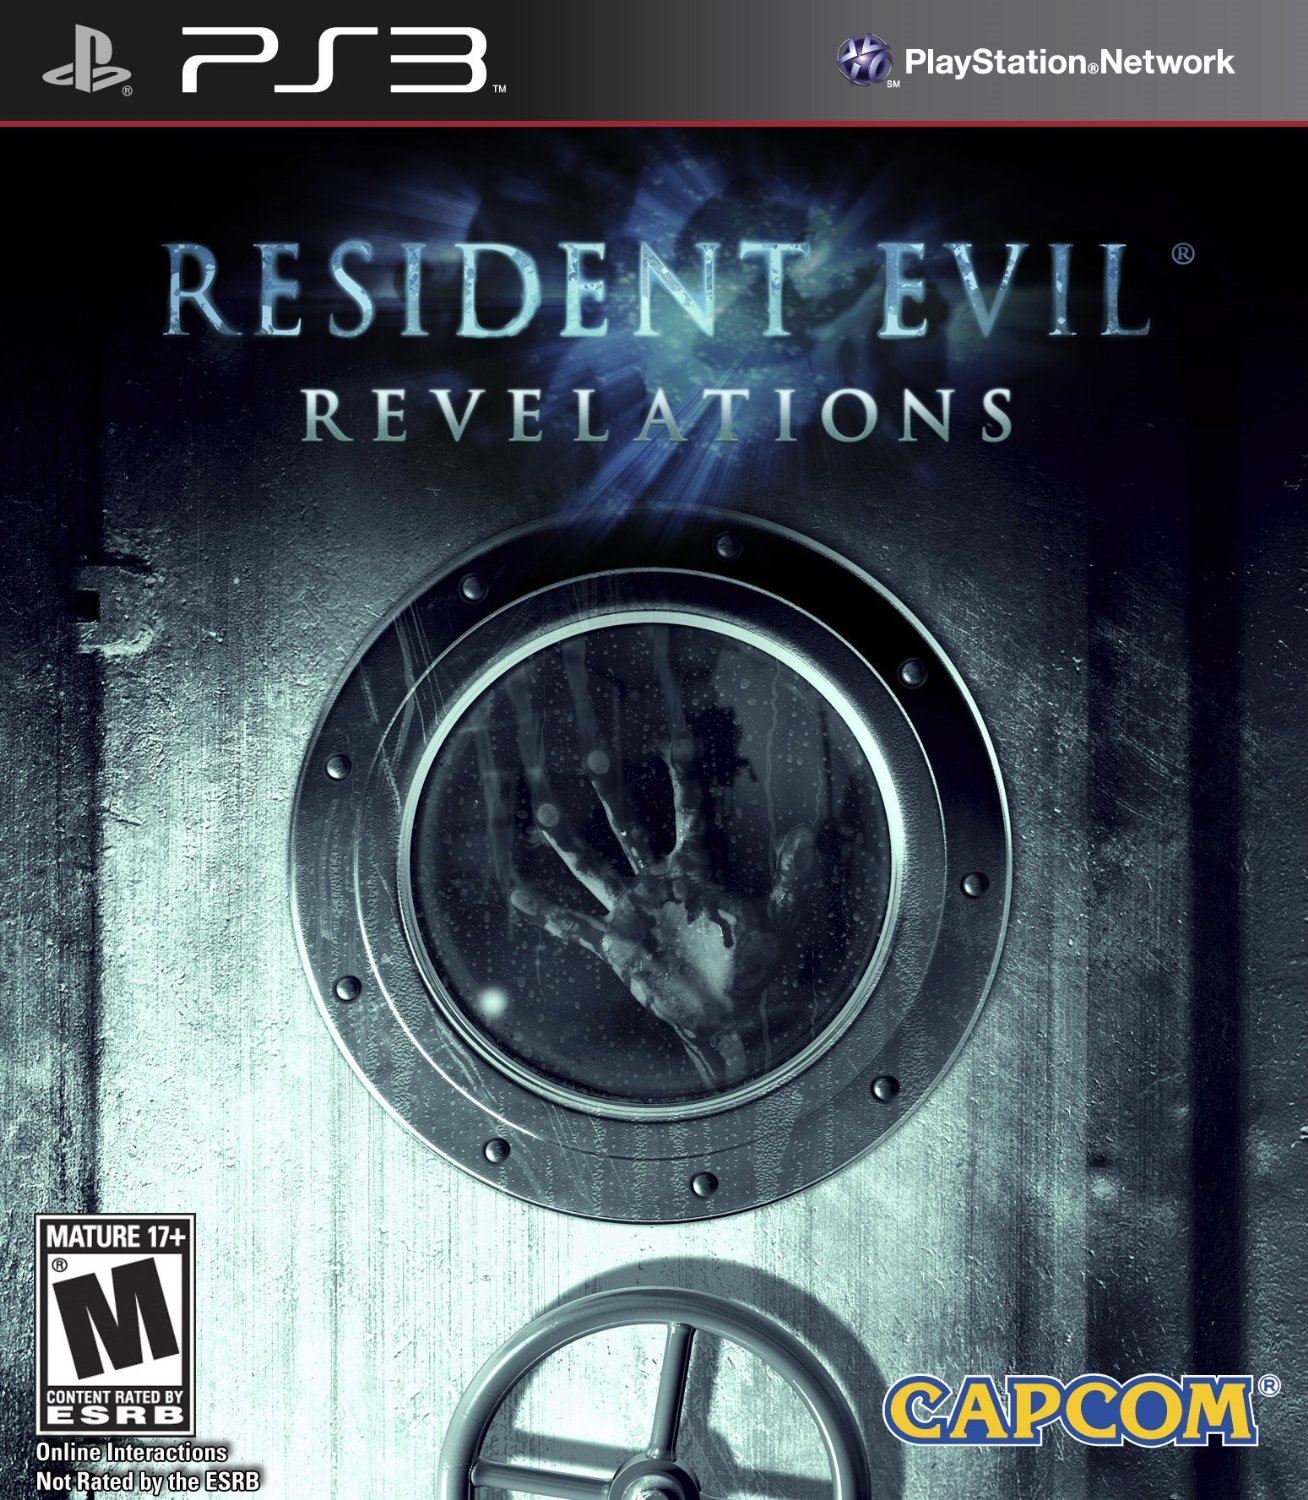 Resident Evil: Revelations HD wallpapers, Desktop wallpaper - most viewed